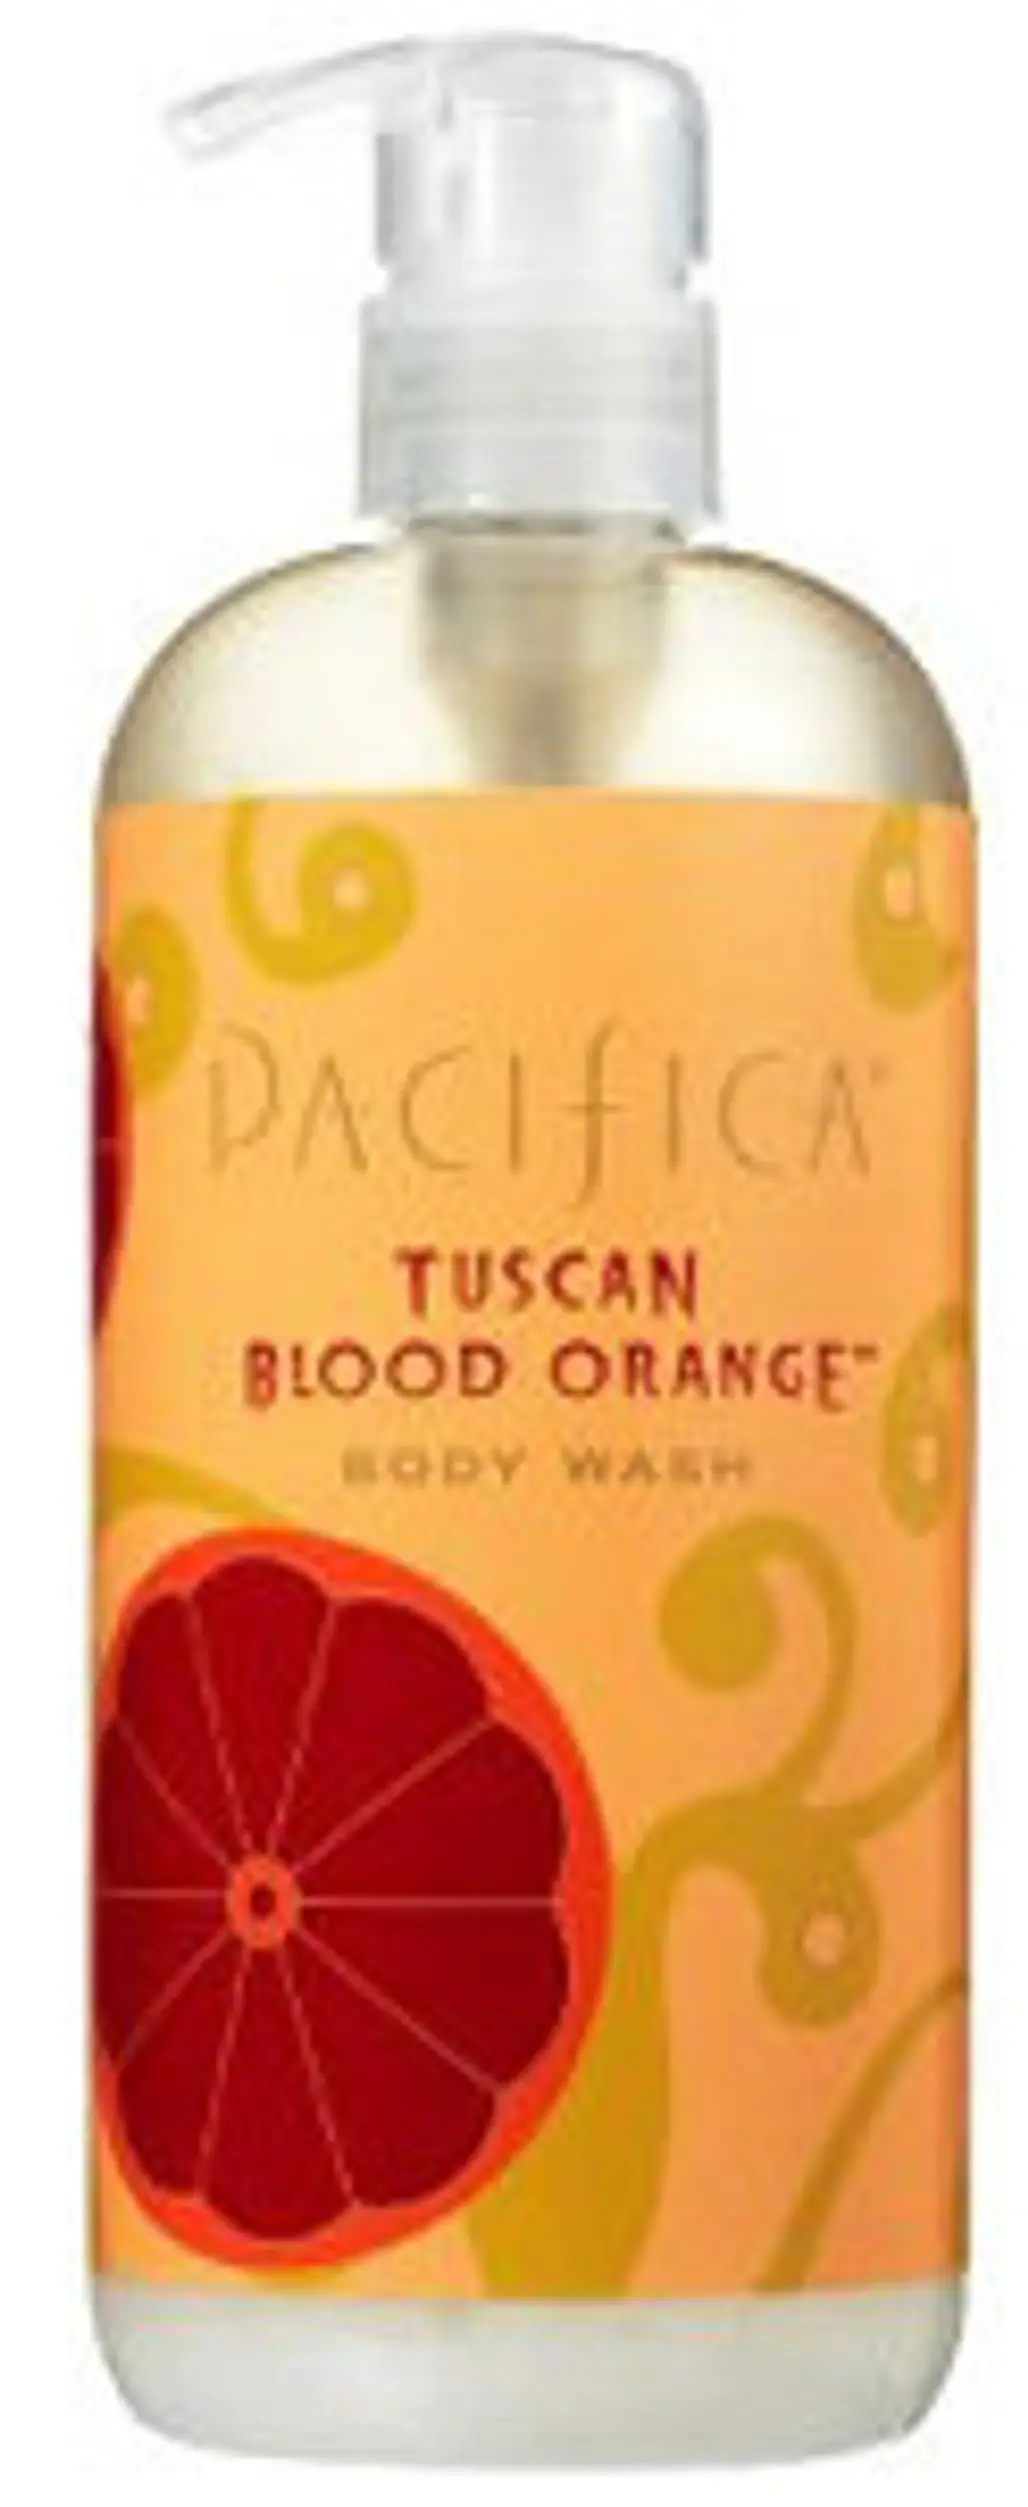 Pacifica Tuscan Blood Orange Body Wash